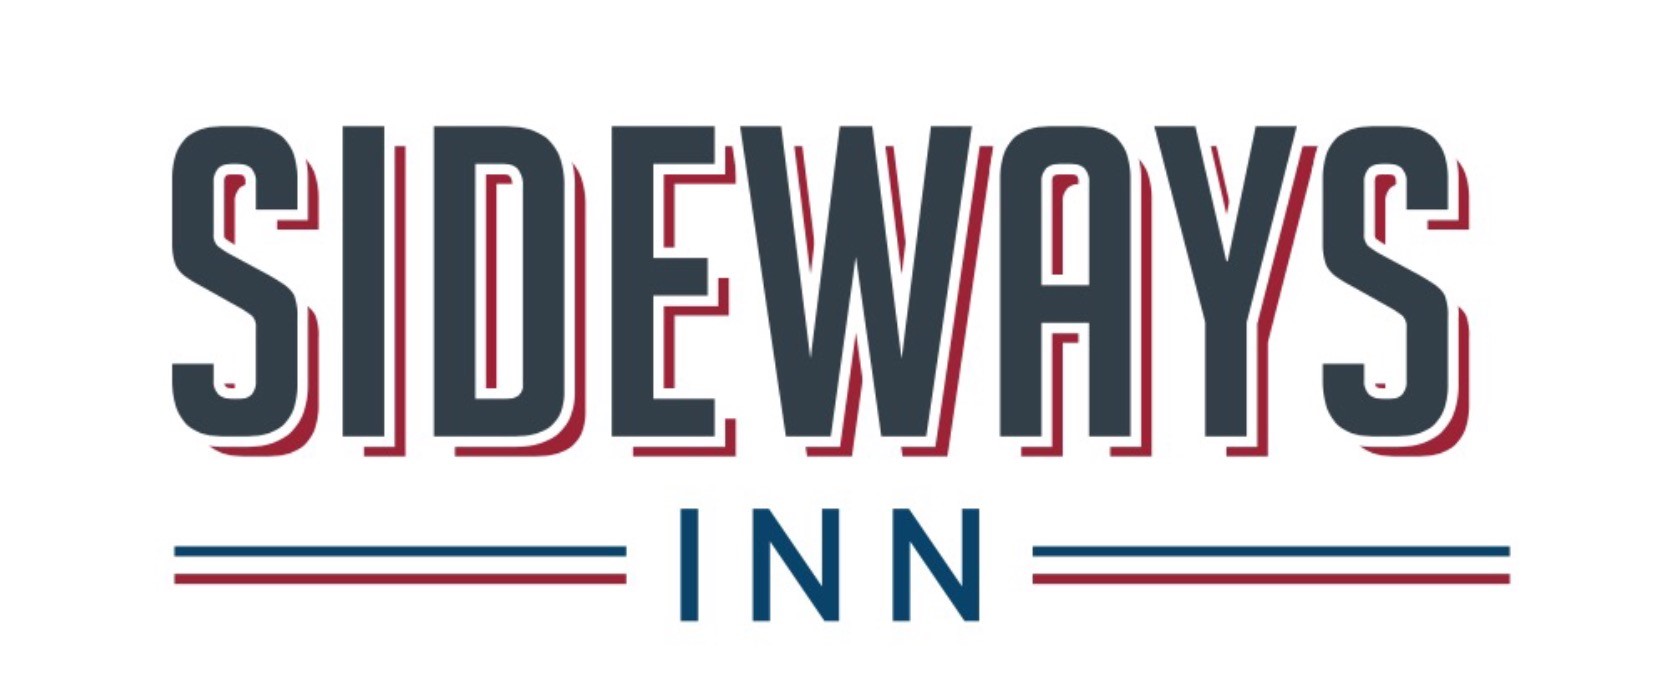 Sideways Inn and Lounge